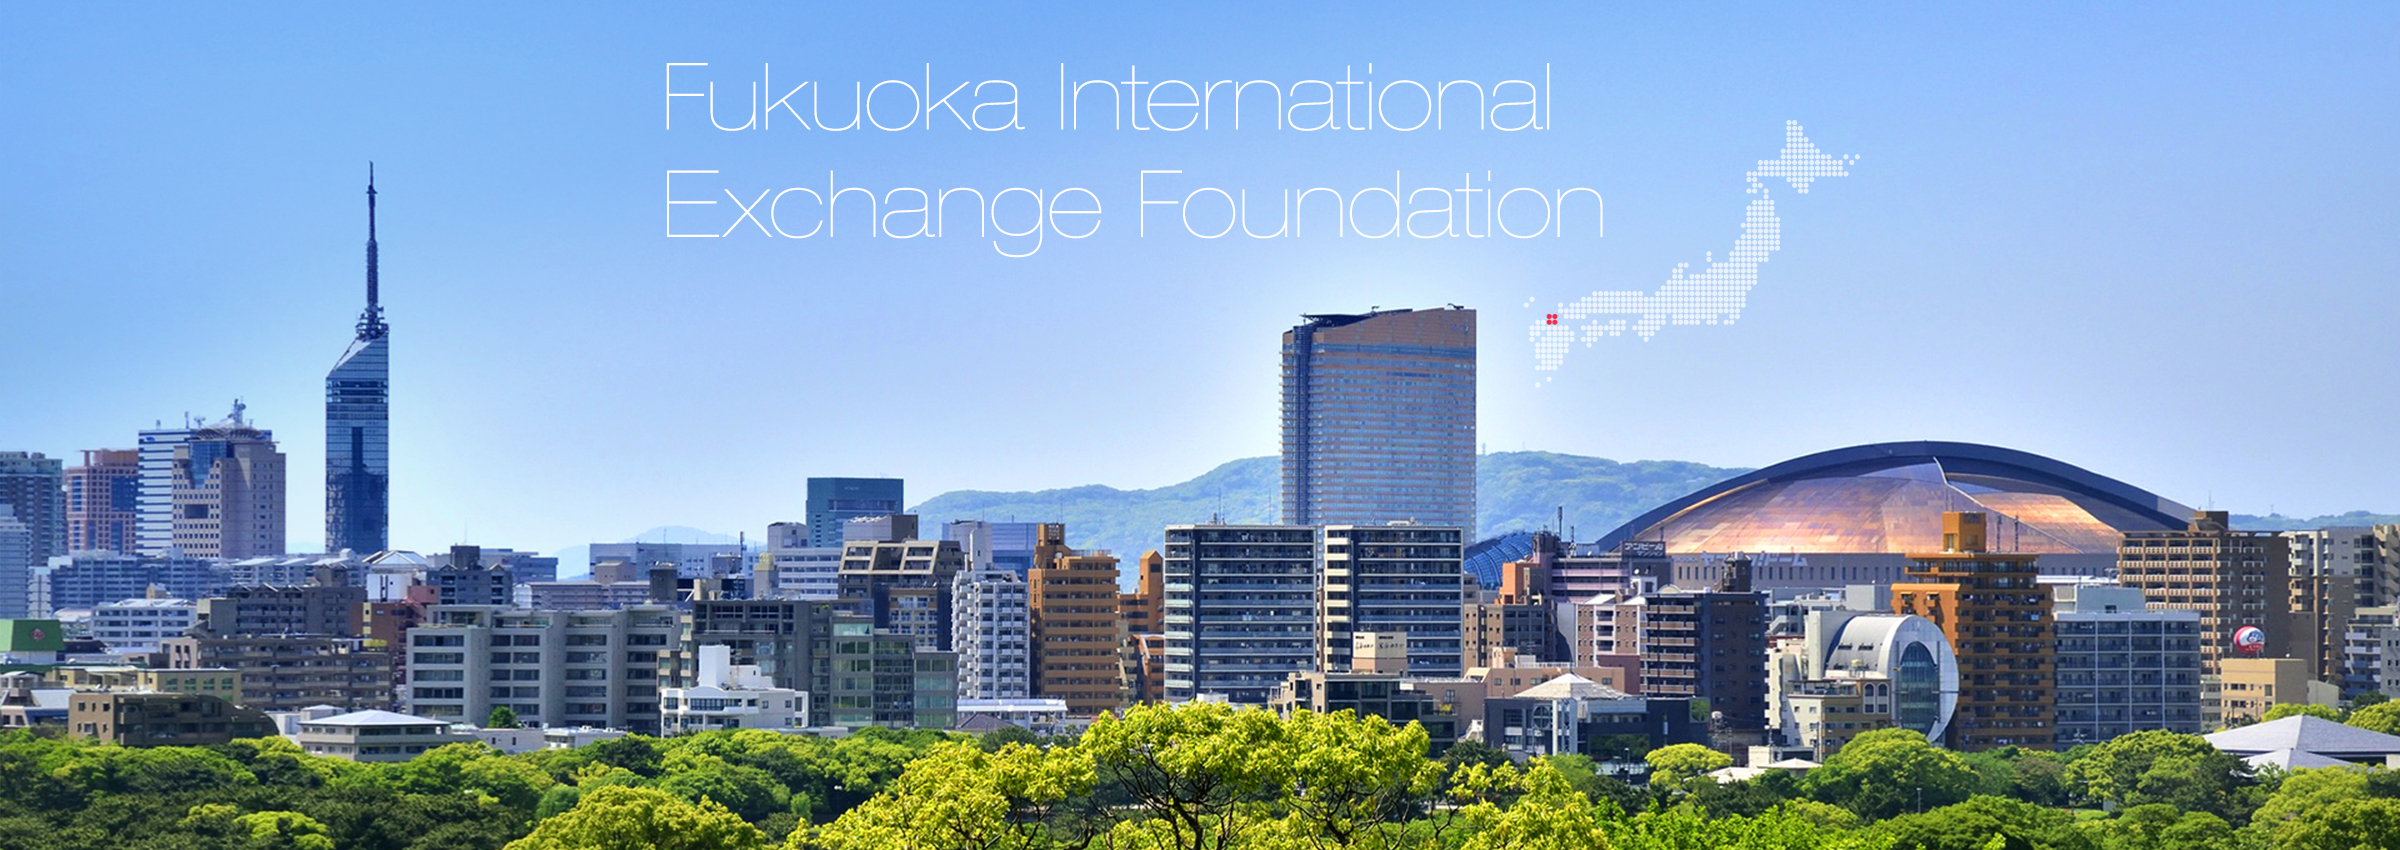 Fukuoka International Exchange Foundation Website!